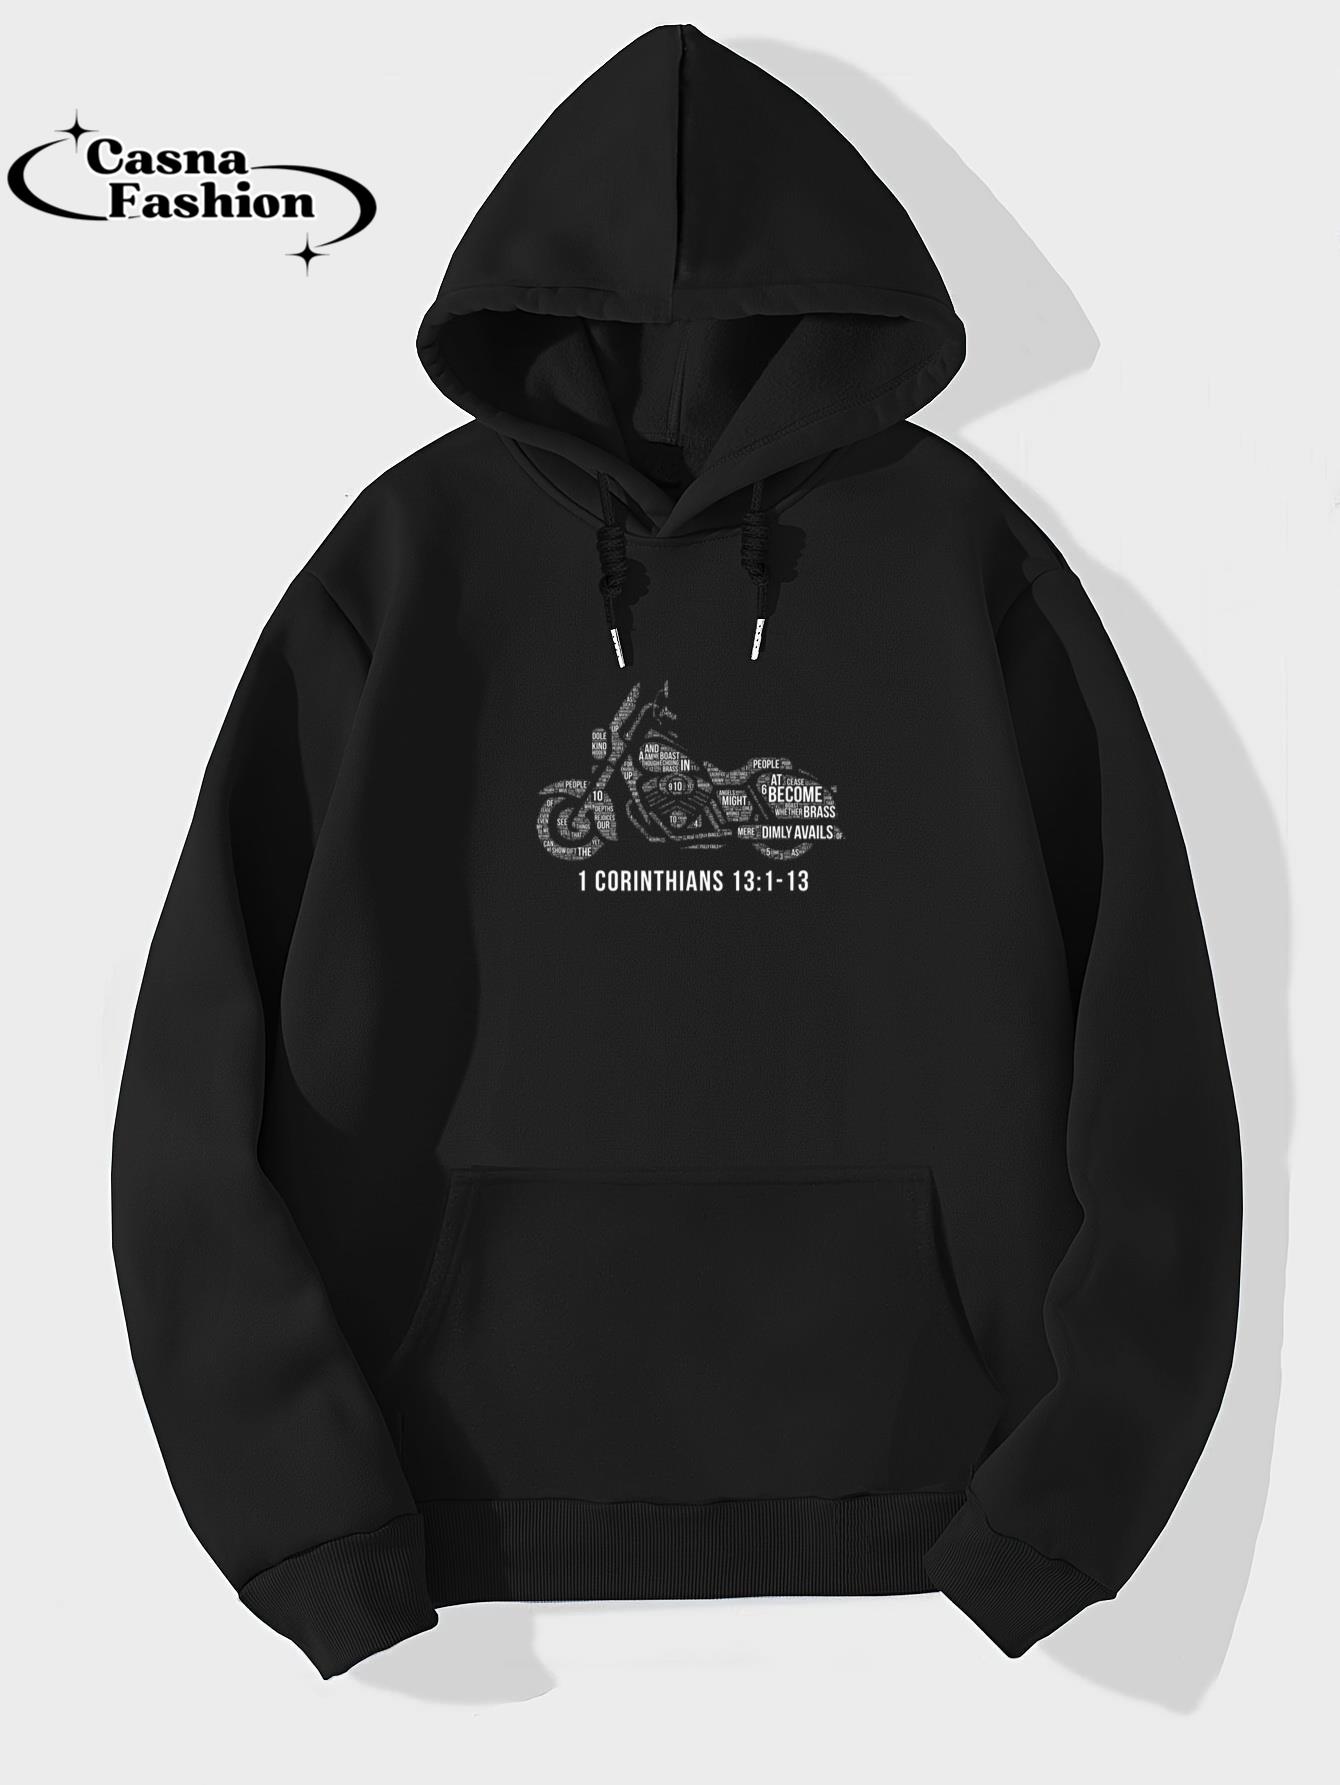 casnafashion_Hoodie_1 Corinthians 13 Christian Biker Christian Motorcycle Gift T-Shirt_hoodie_black hoodie